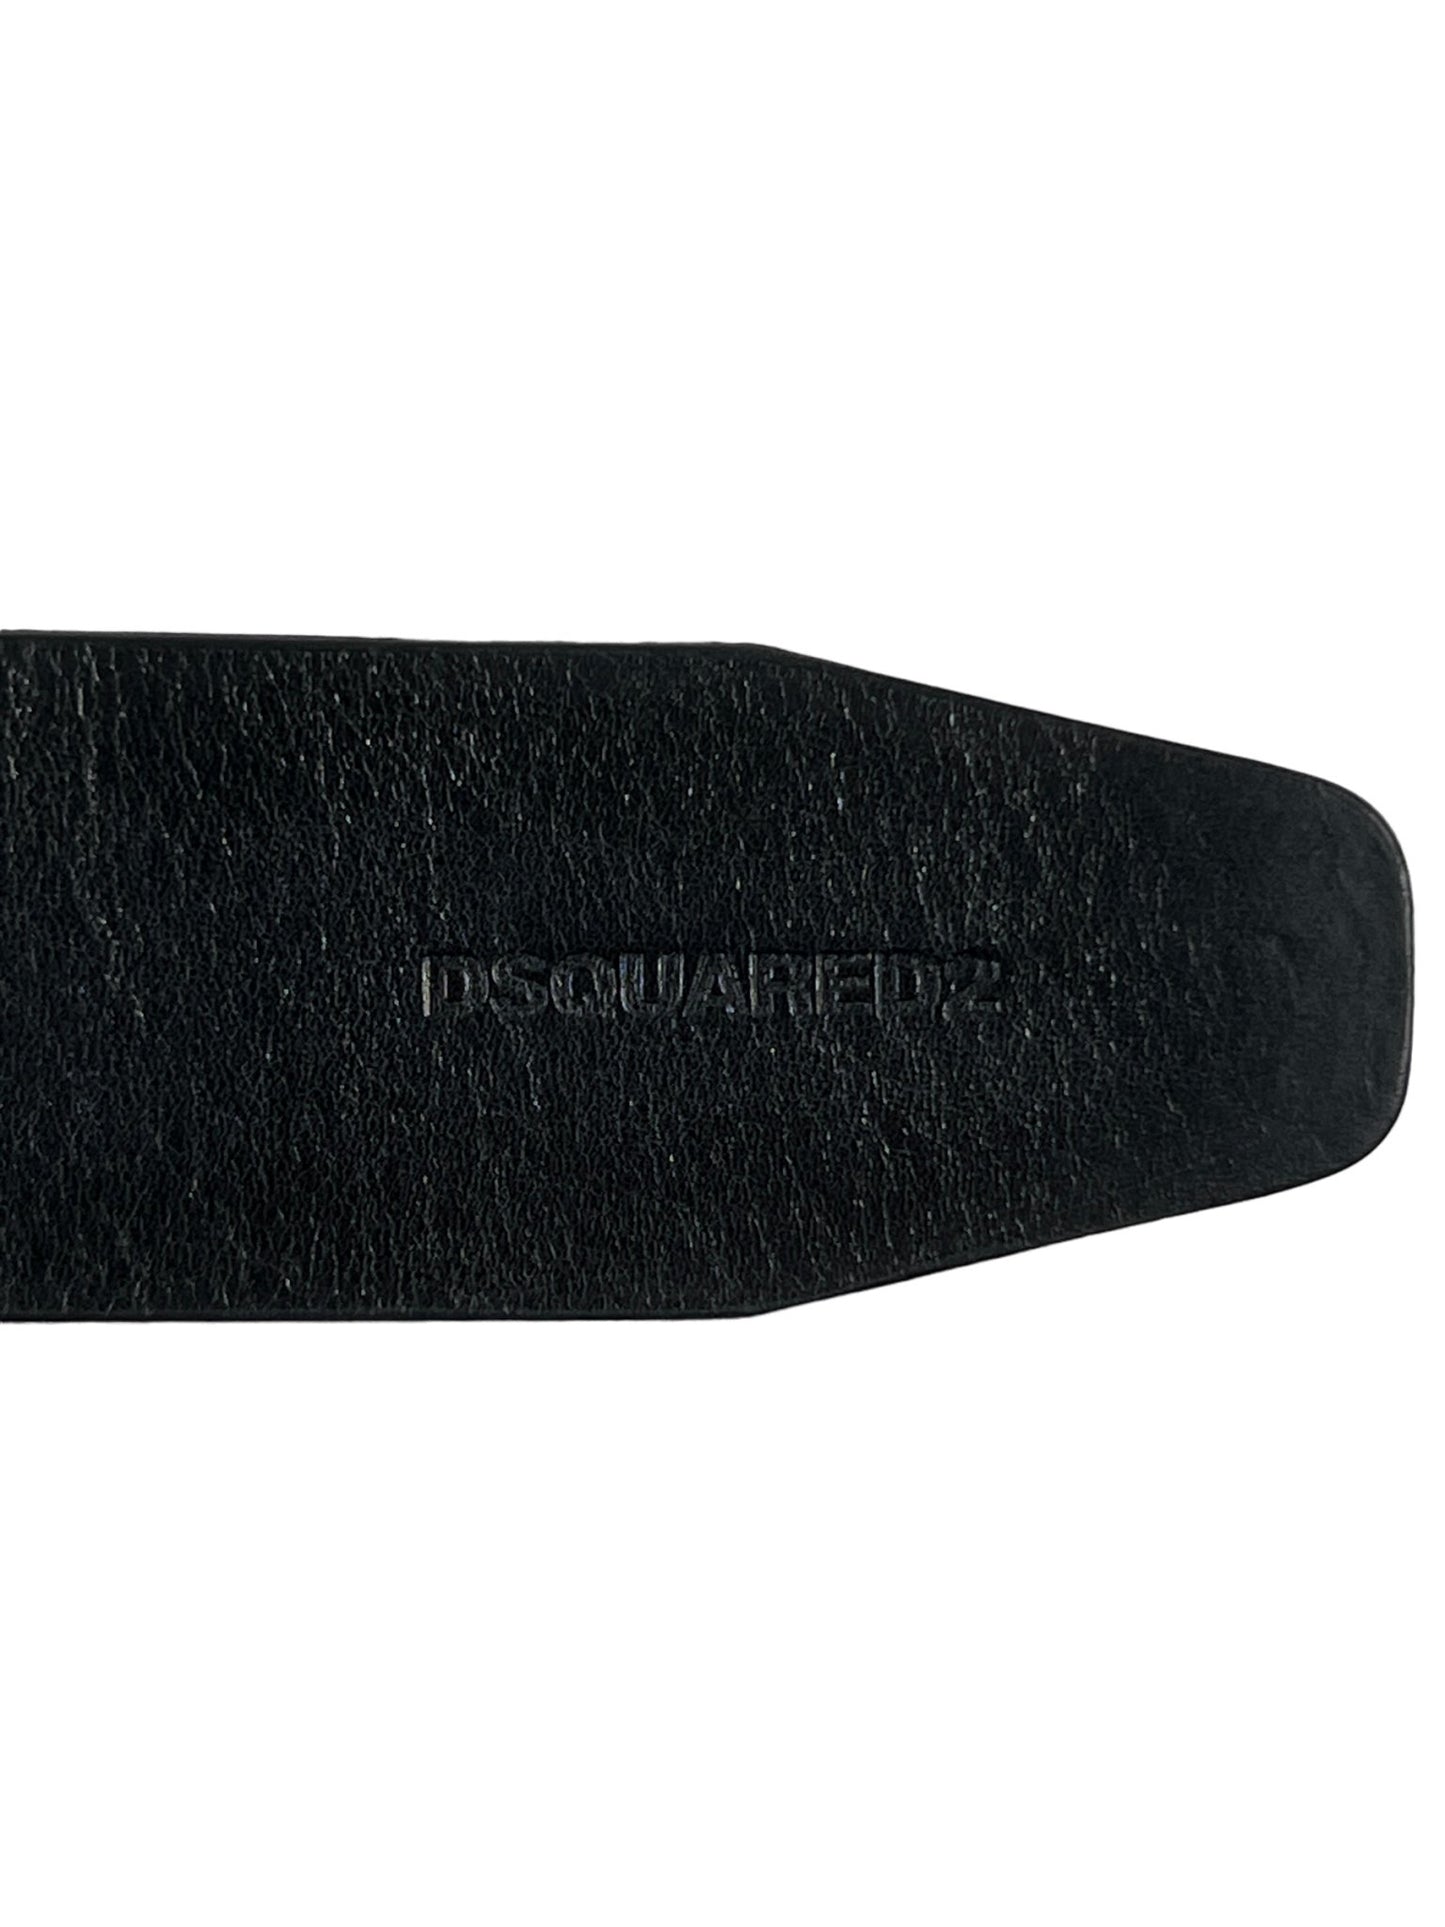 A black DSQUARED2 BEM0549 PLAQUE BELT BLACK with text on it.